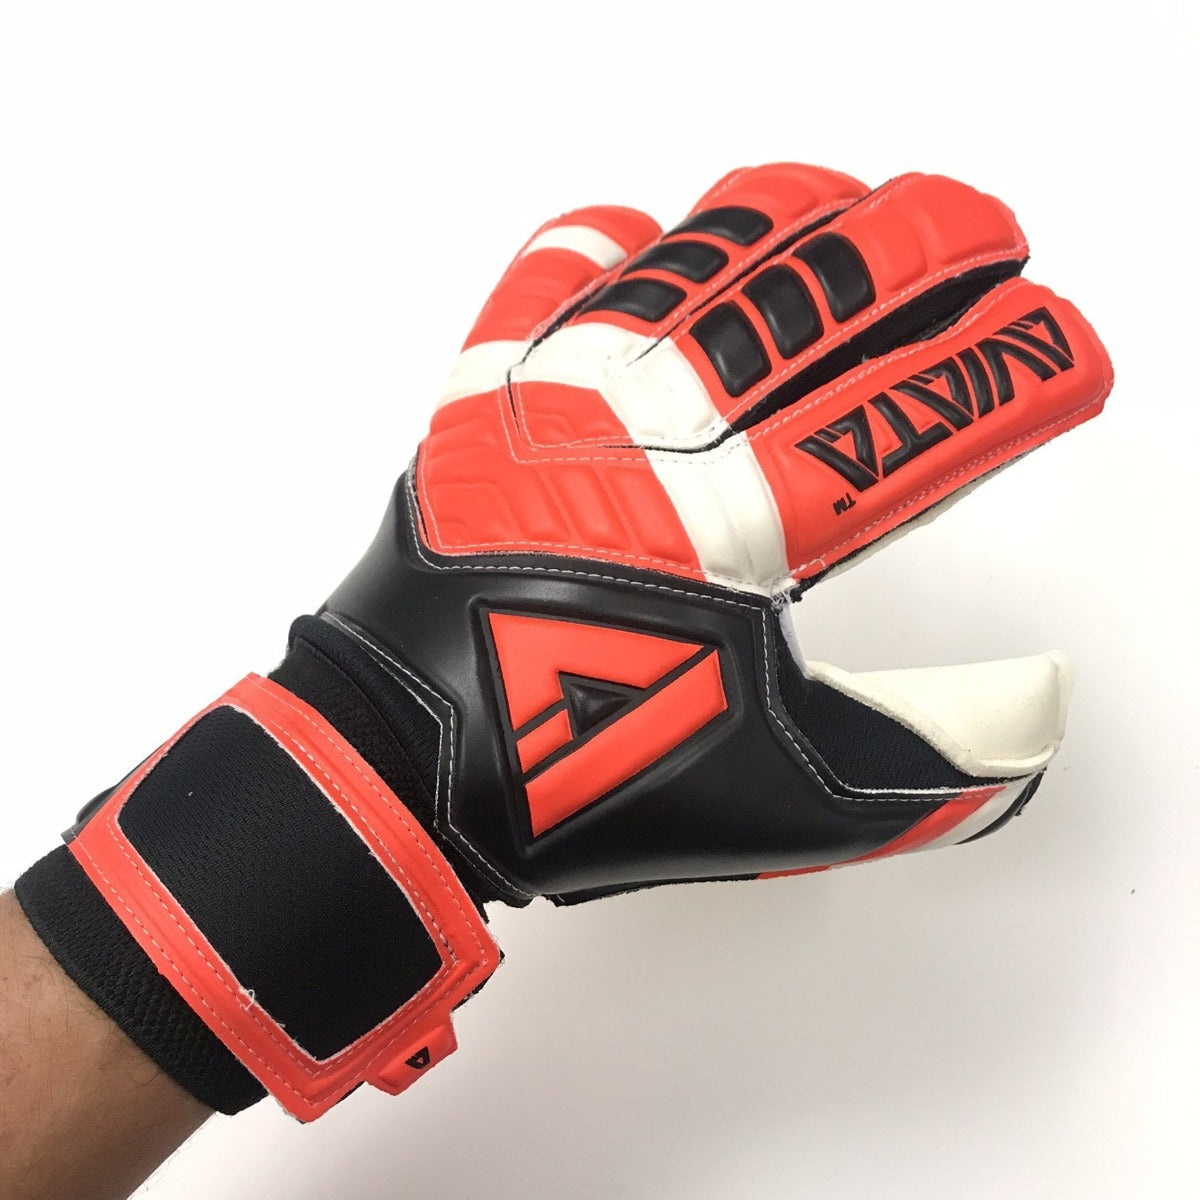 Aviata Light Bright Club Solar Shield Goalkeeper Gloves - Red-Black-White (Single)